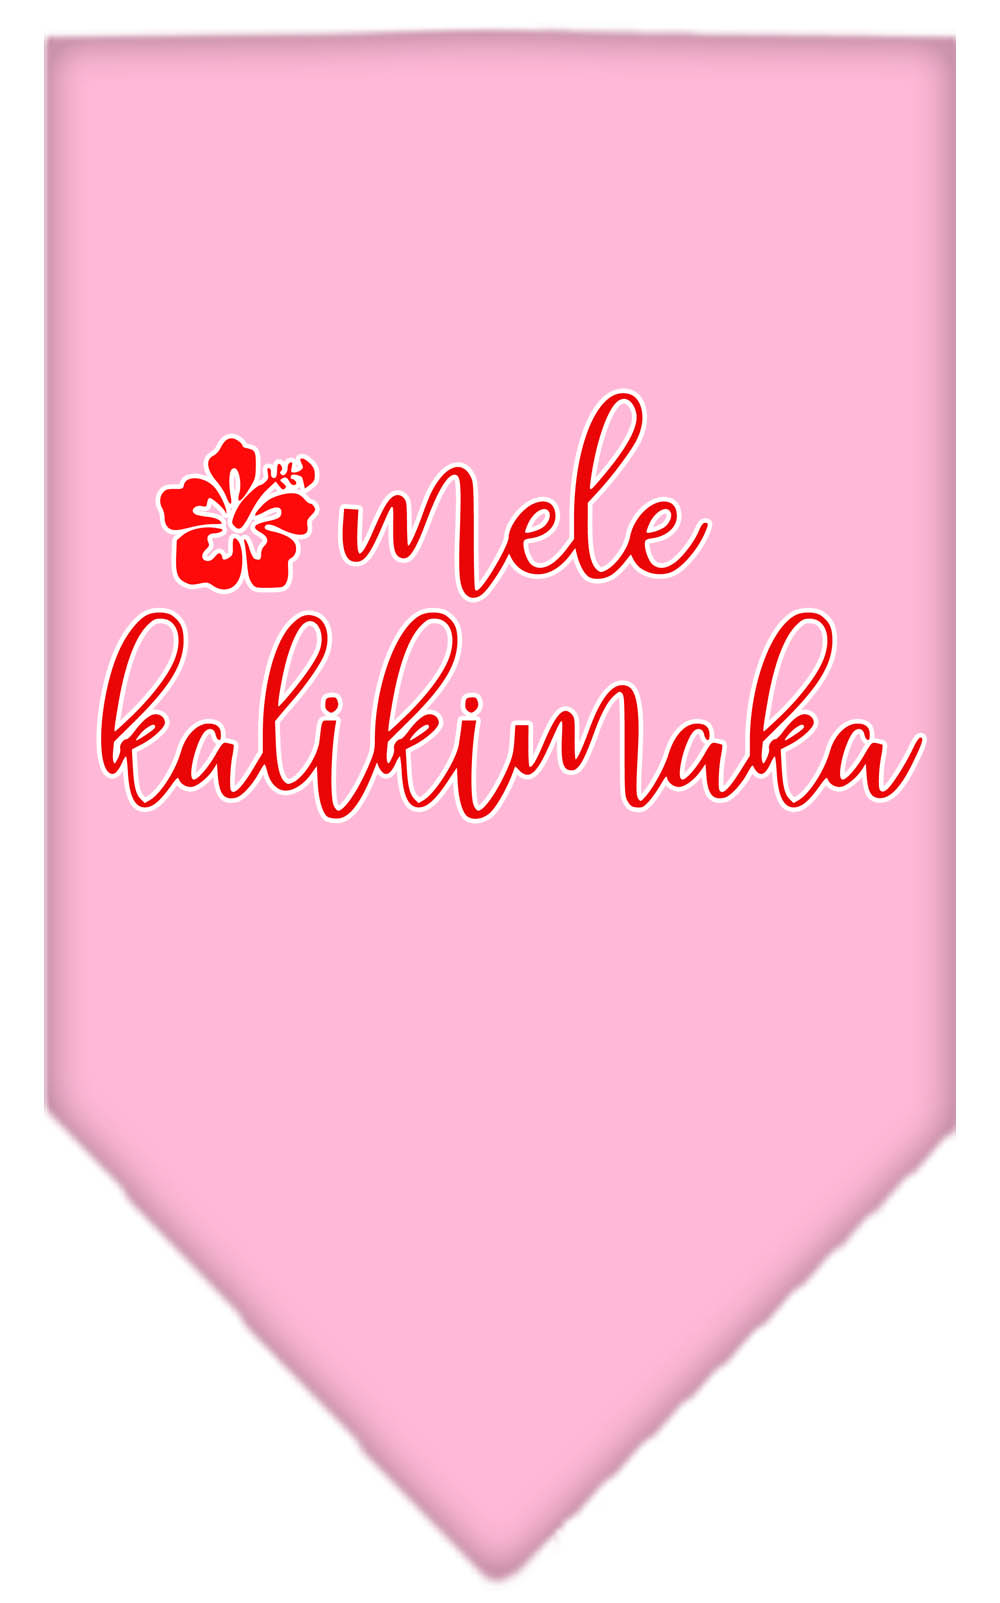 Mele Kalikimaka Screen Print Bandana Light Pink Large